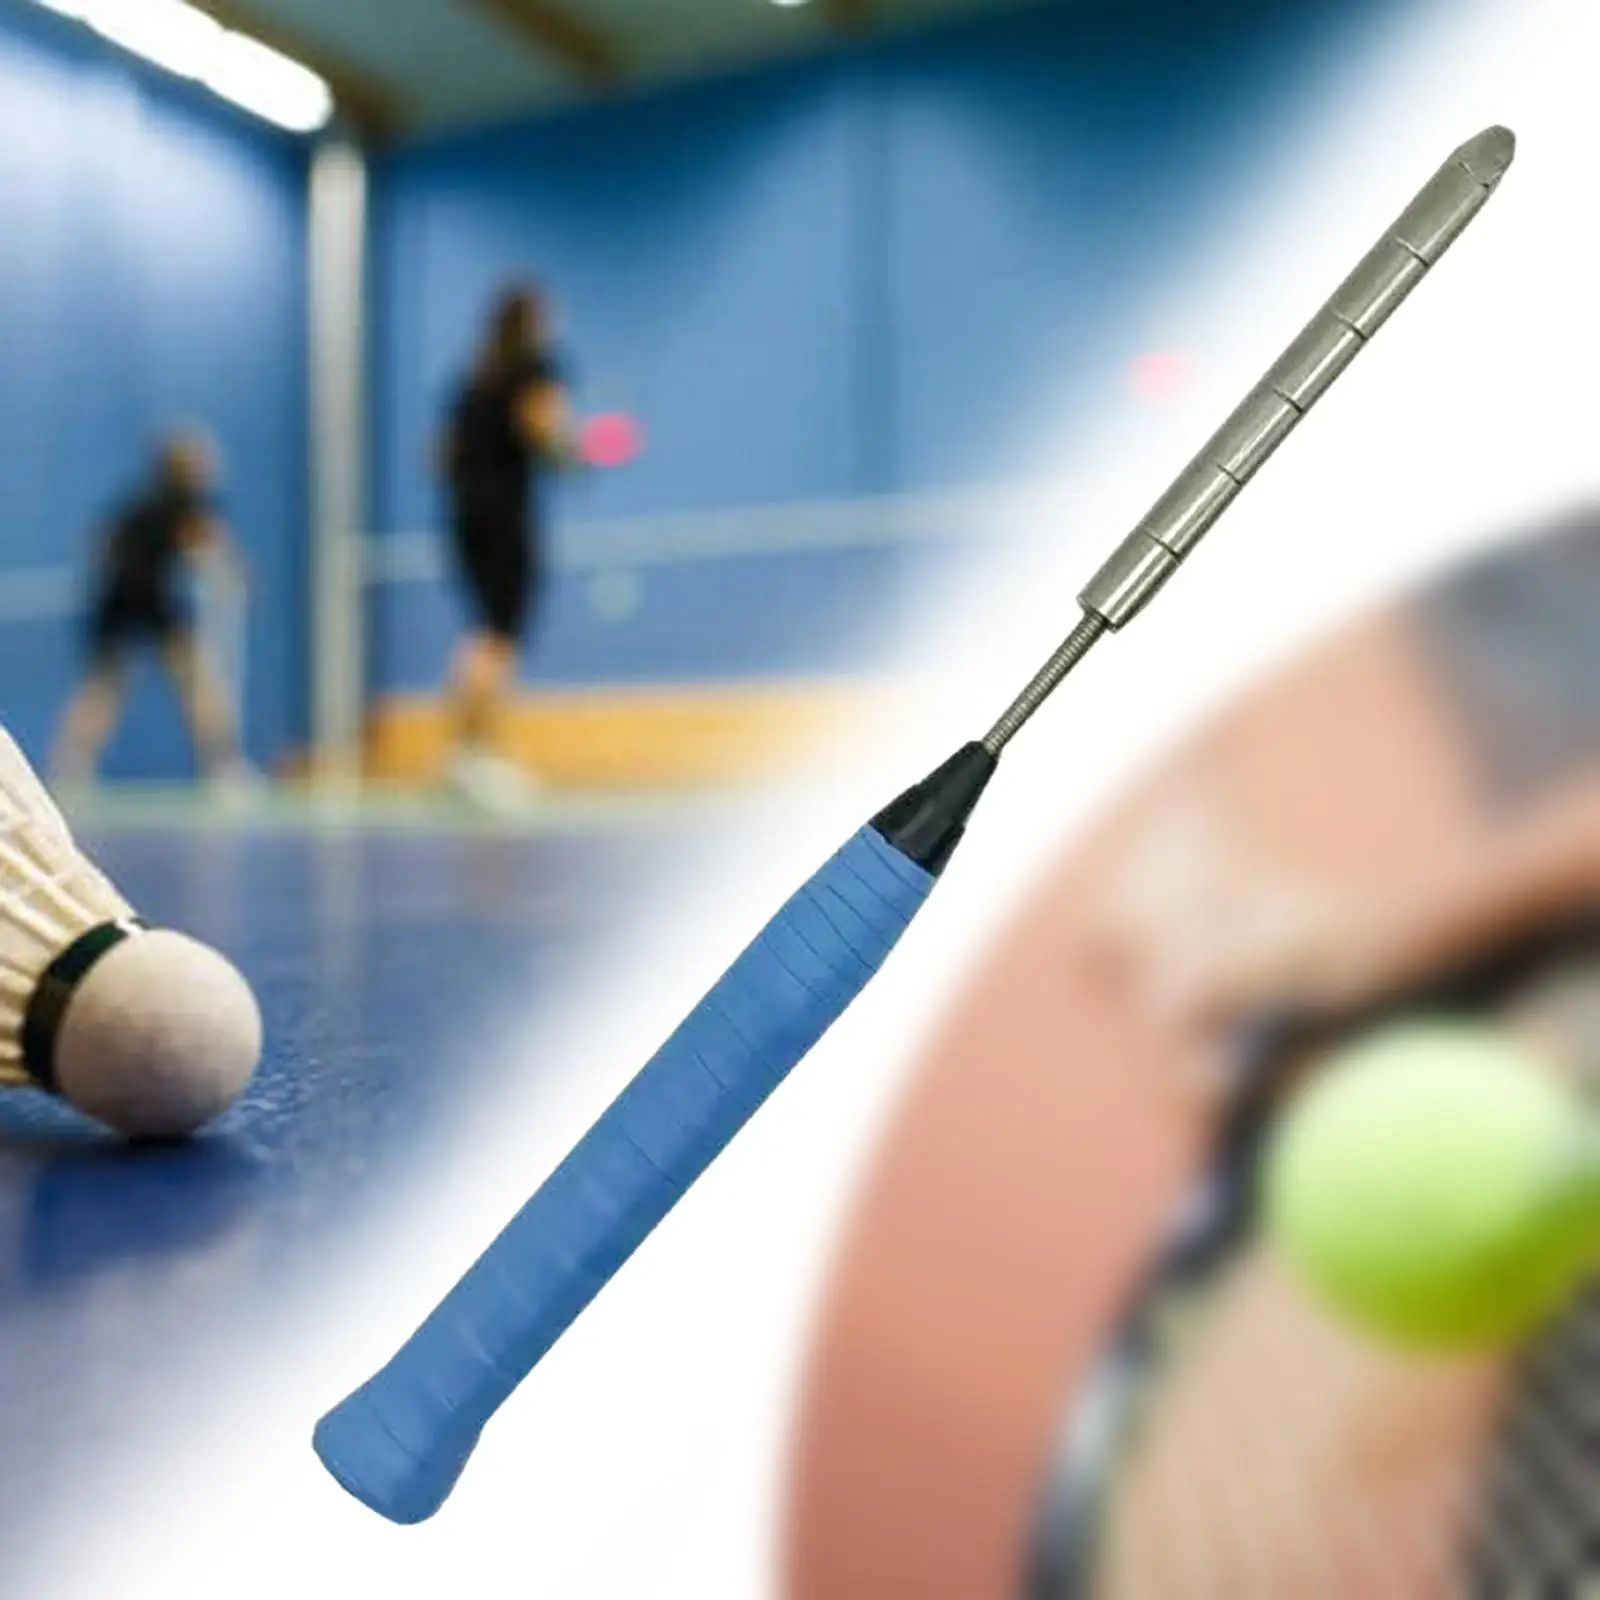 Badminton Training Racket Stainless Steel Weight Block Training Device Badminton Racket Swing Trainer for Speed, Power Training